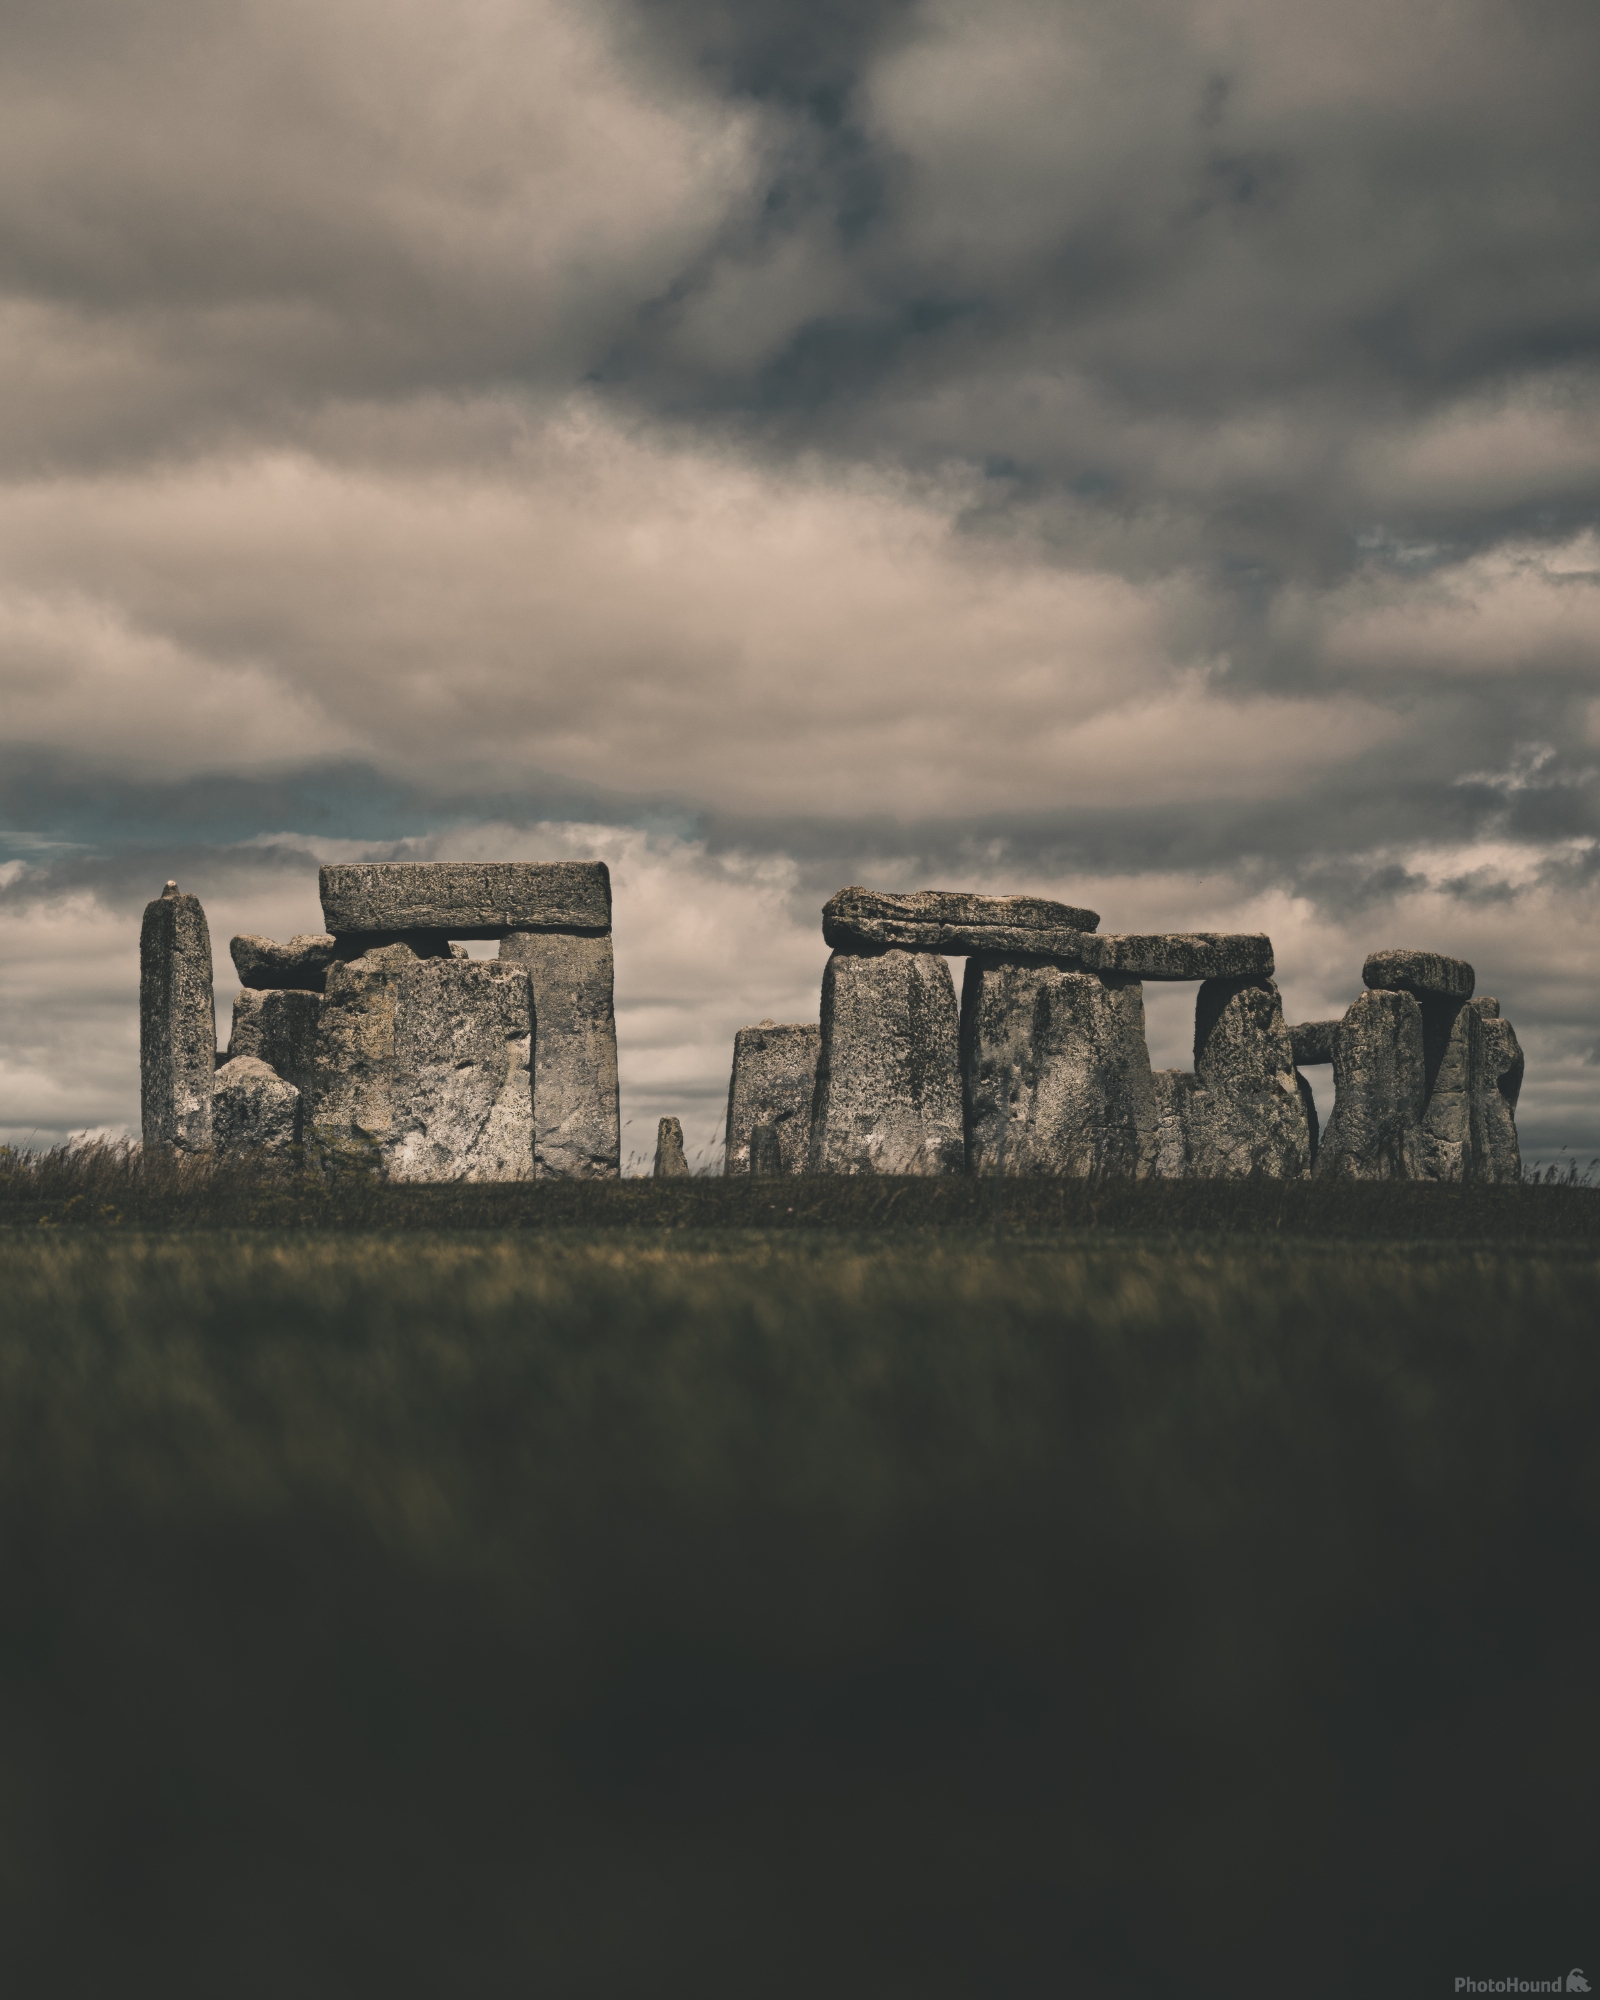 Image of Stonehenge by Daniel Phillips